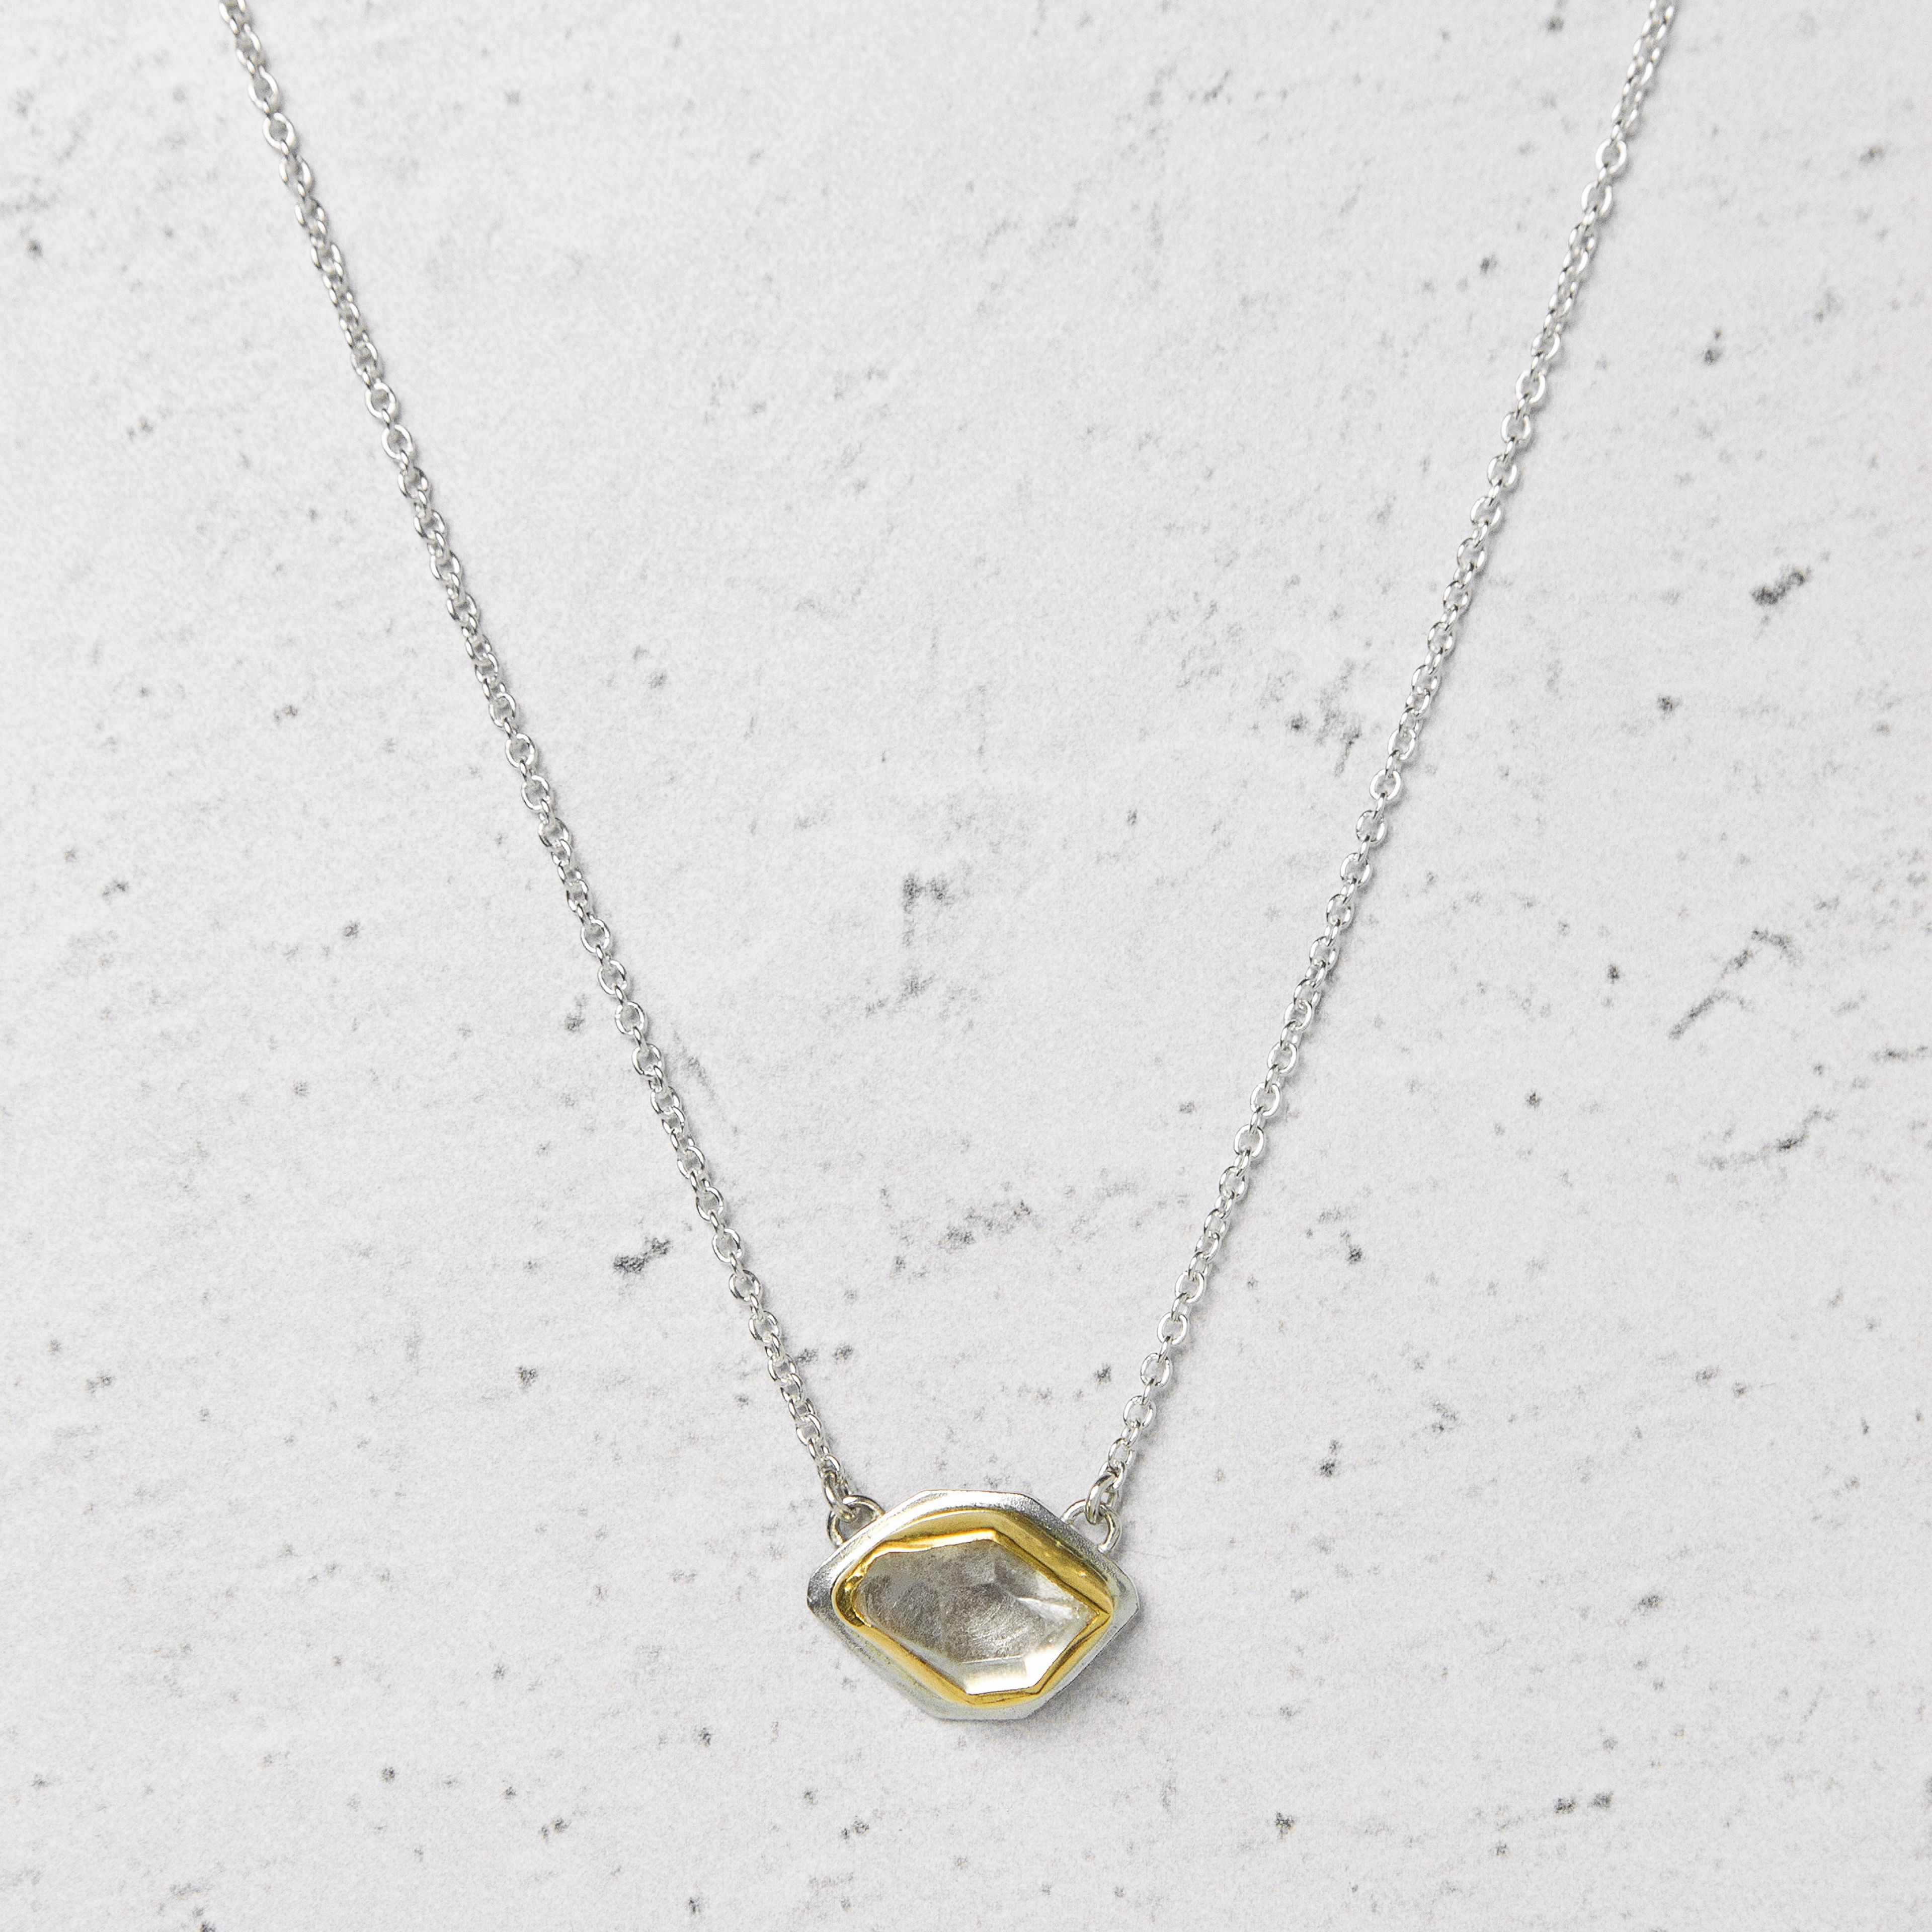 Herkimer Diamond East-West Glacier Necklace in 22k Gold + Sterling Silver